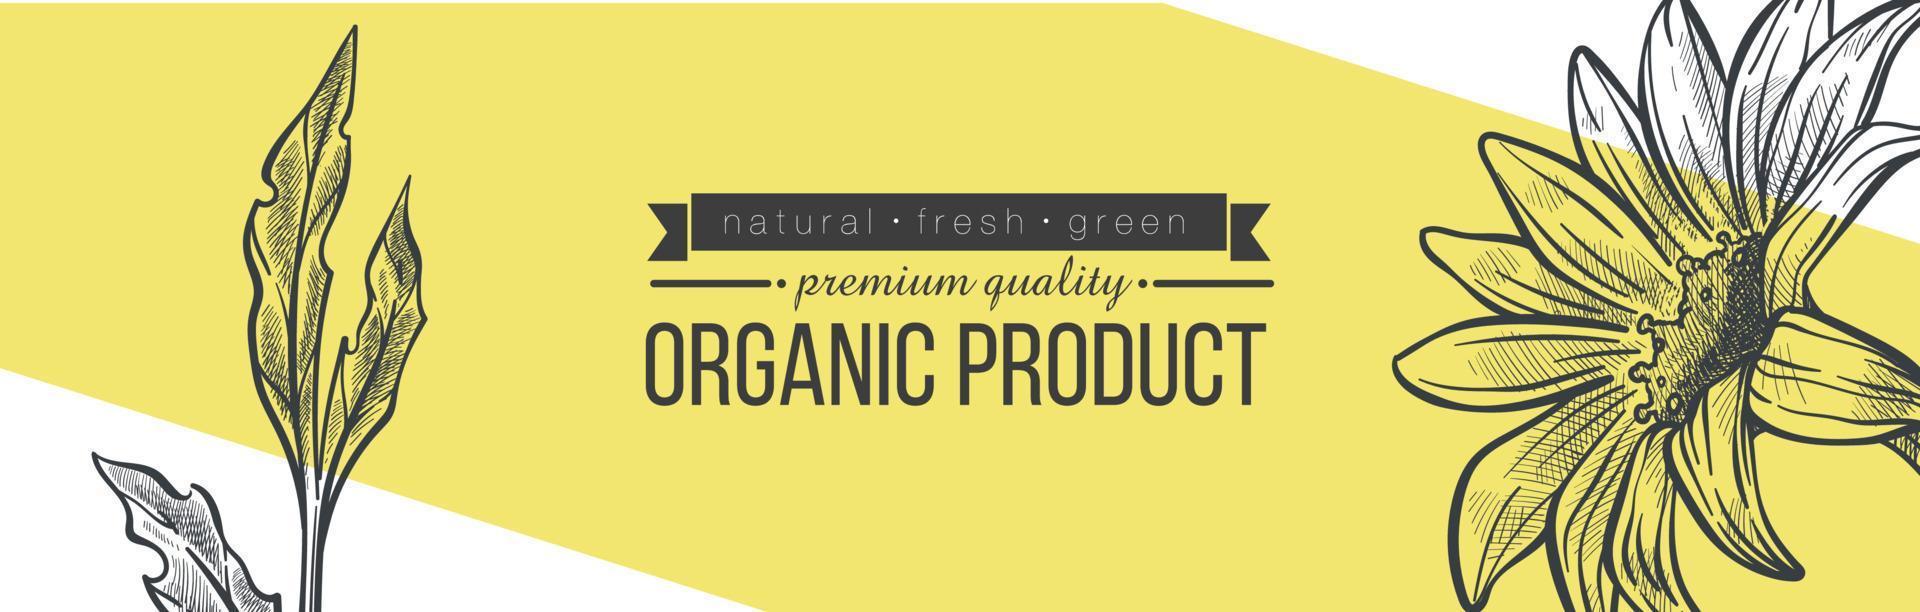 organisk Produkter i affär, premie kvalitet baner vektor